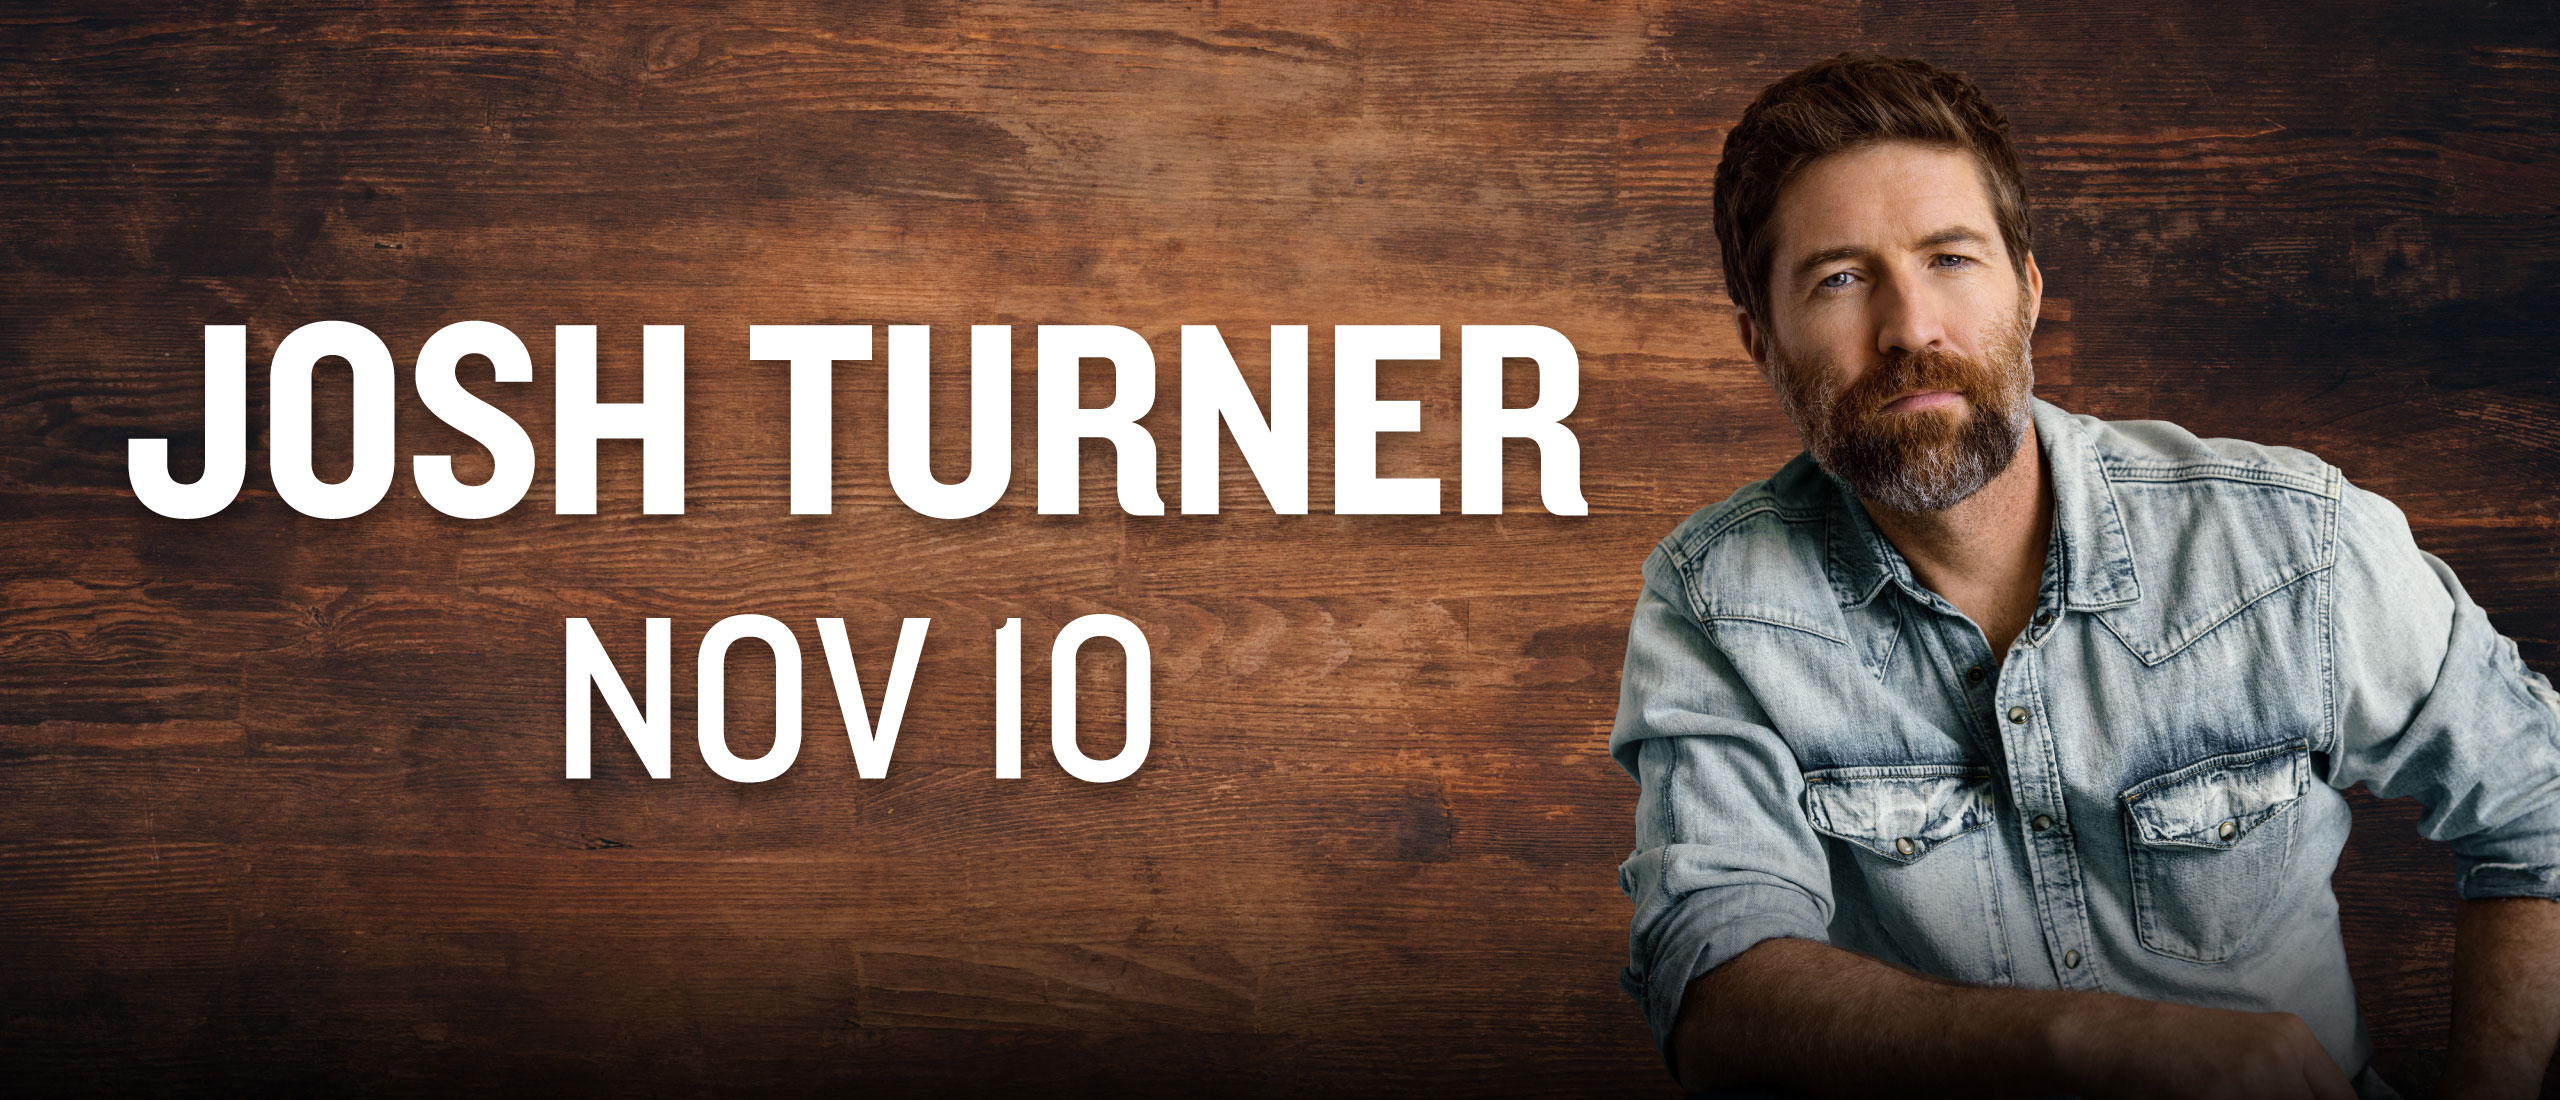 Josh Turner Nov. 10